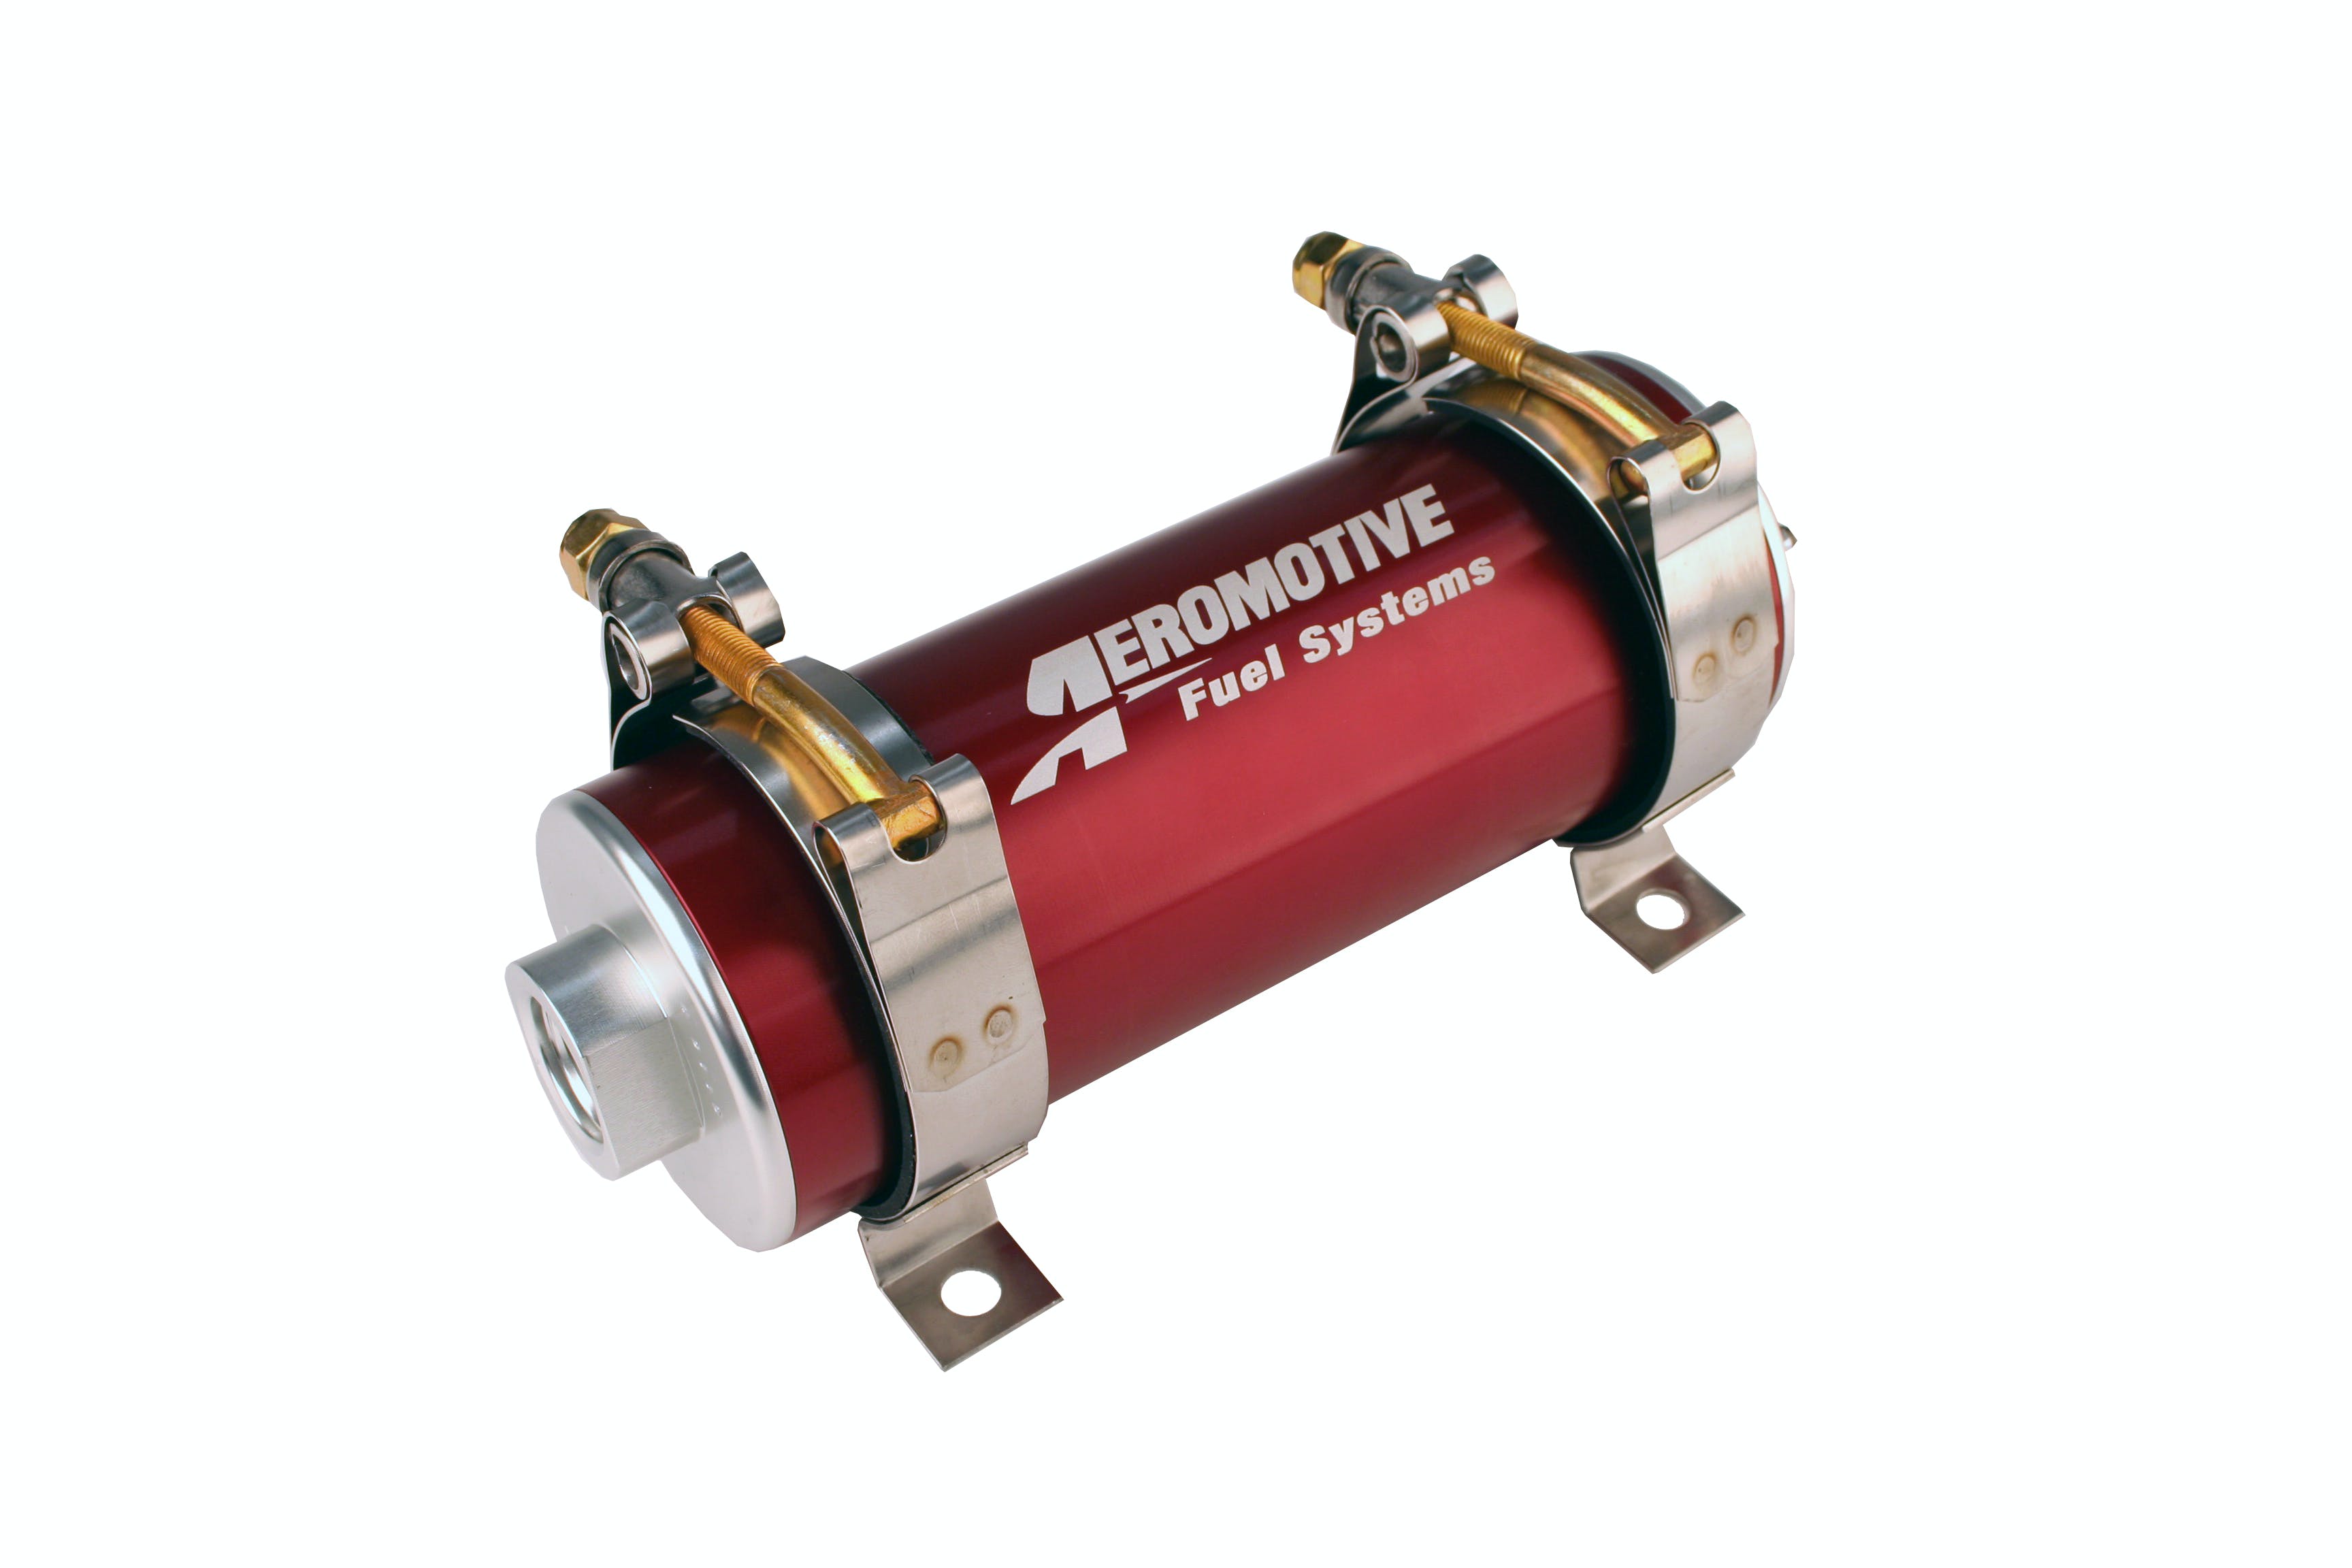 Aeromotive Fuel System 11106 700 HP EFI Fuel Pump - Red